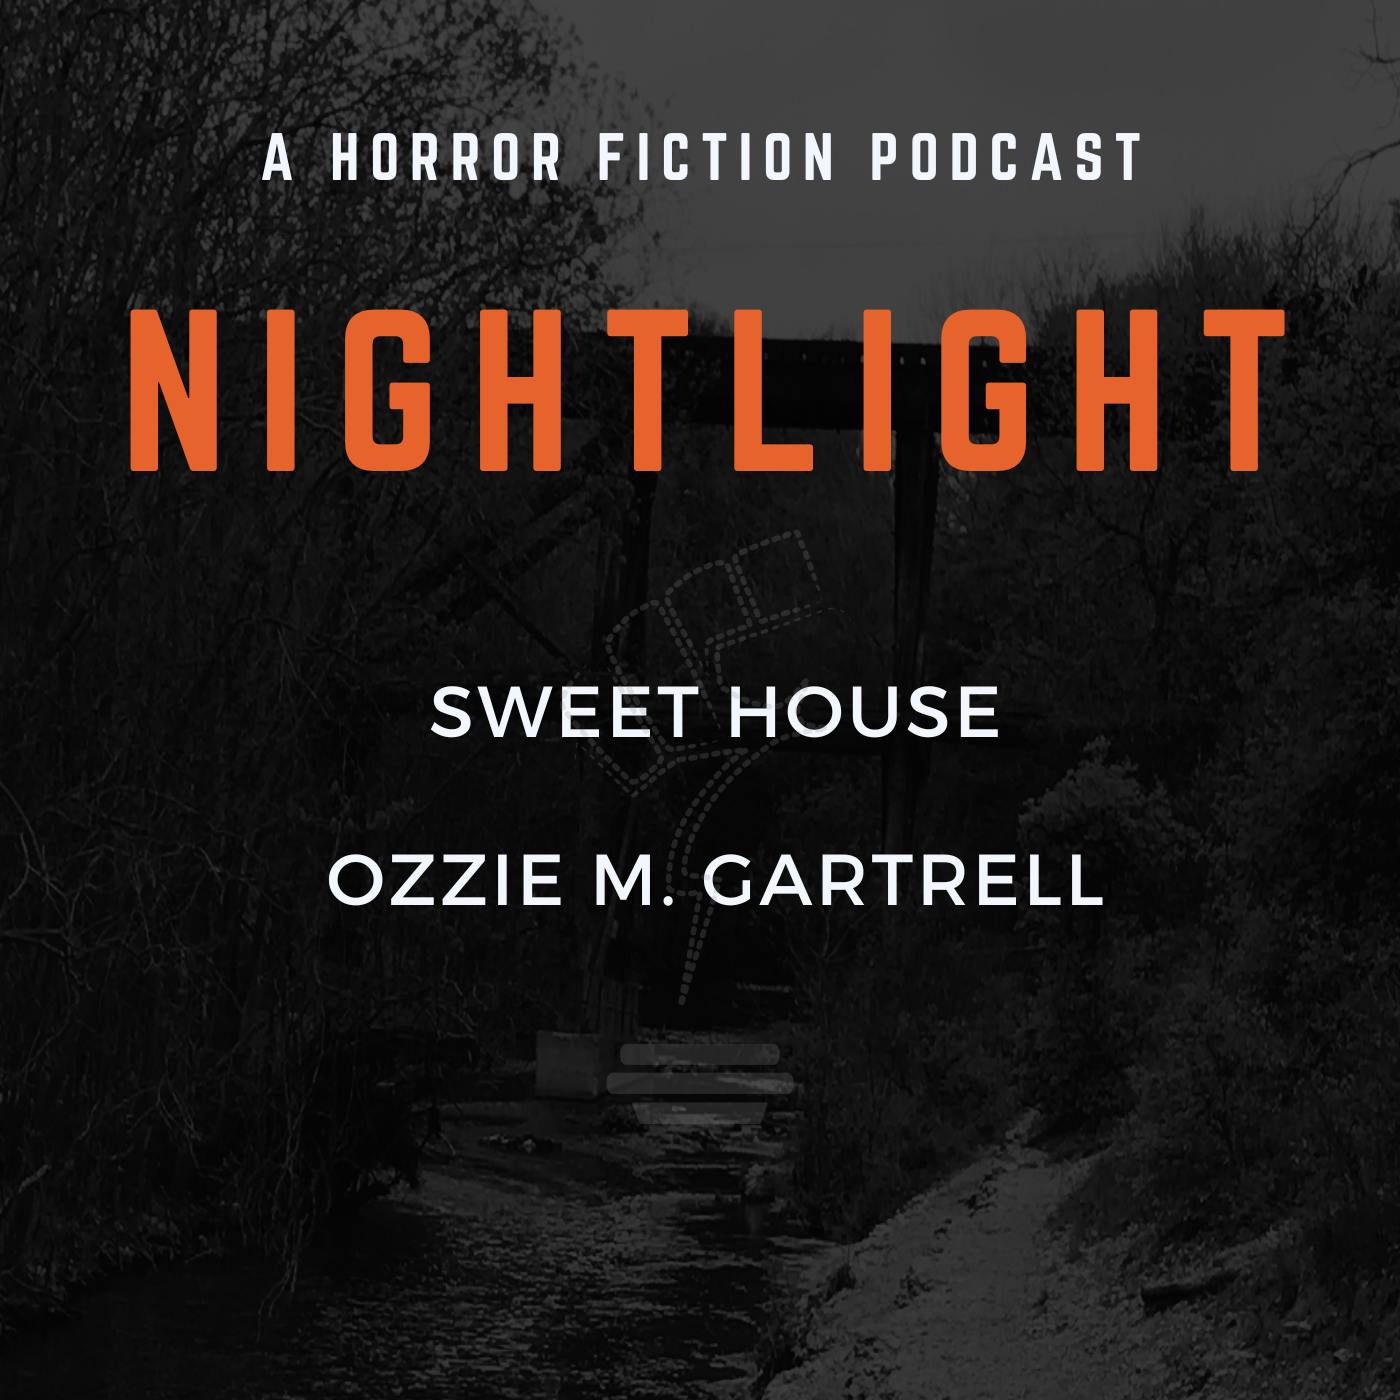 626: Sweet House by Ozzie M. Gartrell